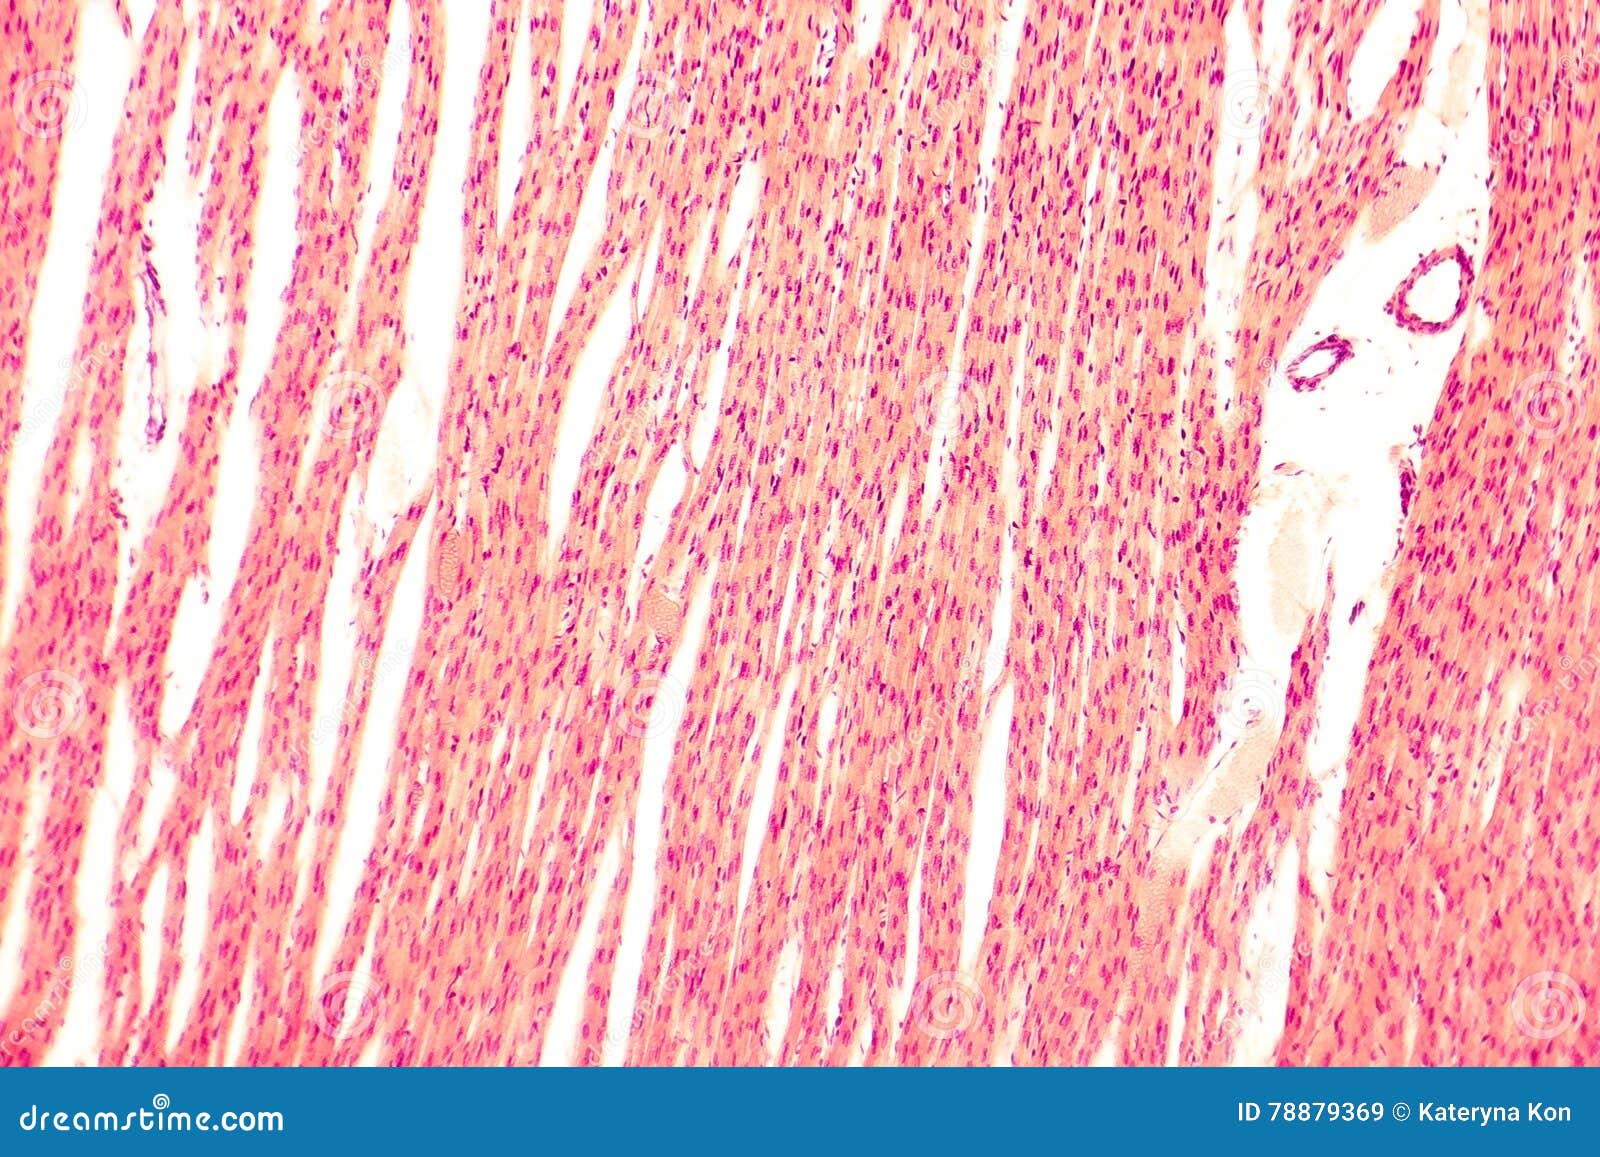 heart muscle, light micrograph